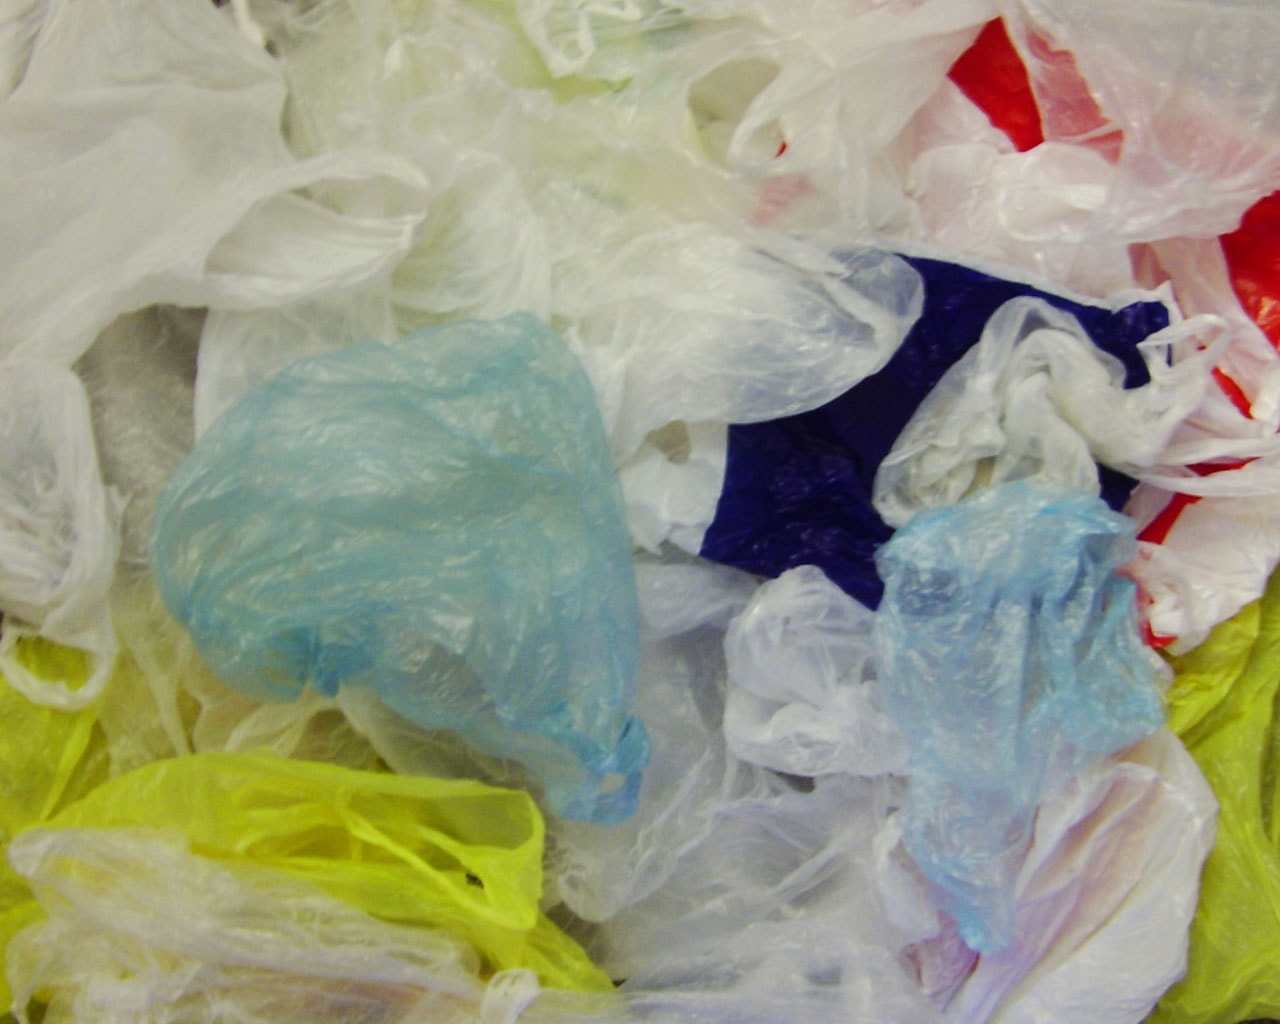 Plastične vrečke. Vir: Wikipedia